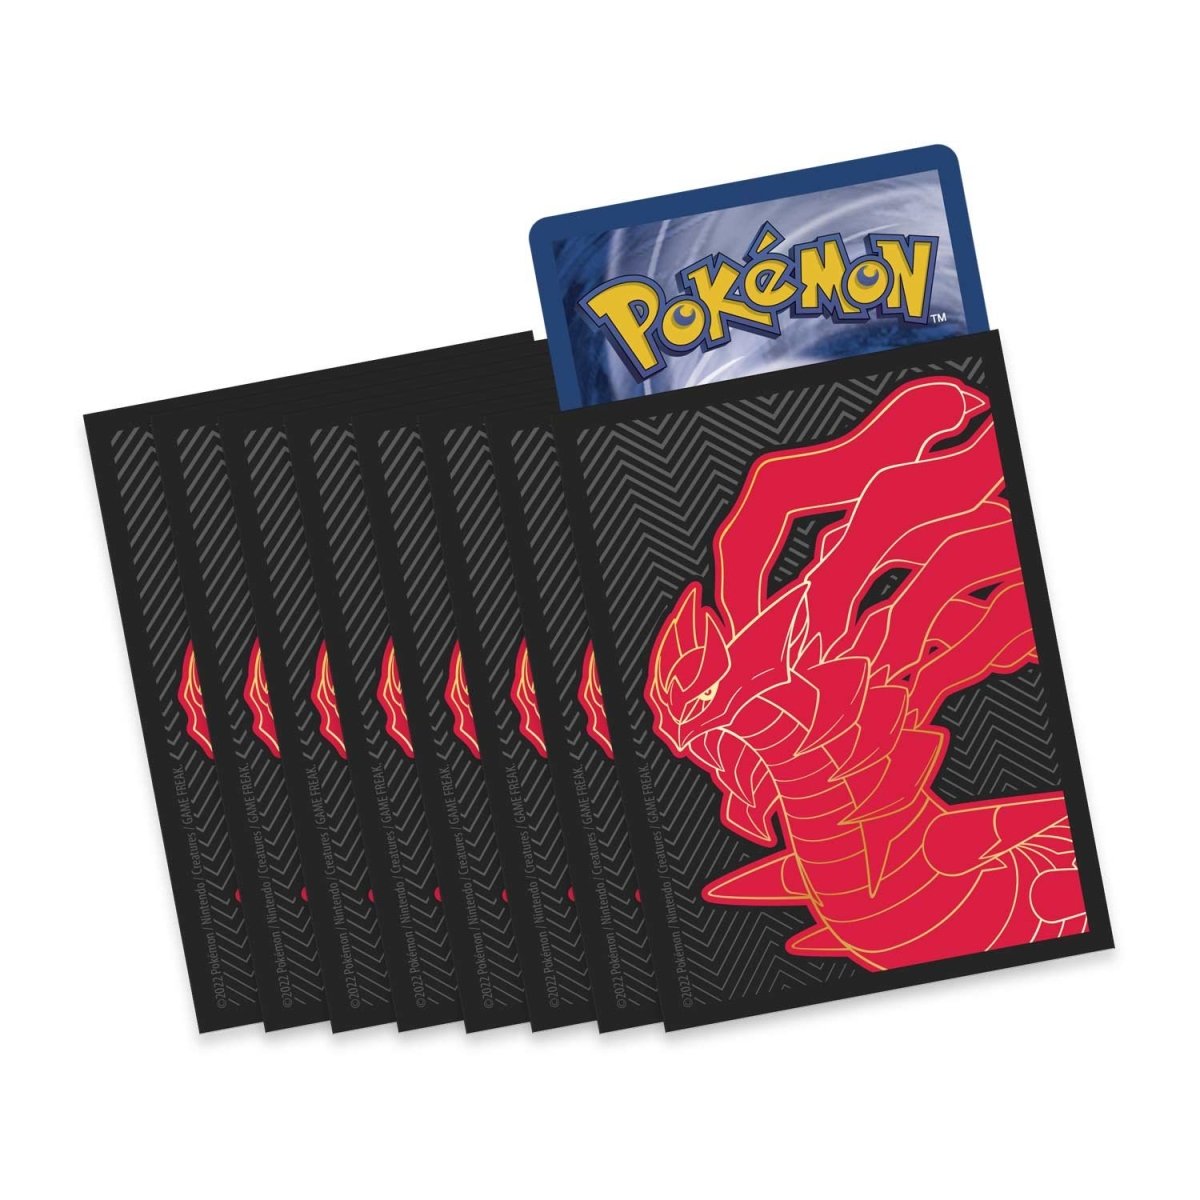 Pokémon Trading Card Games Sword & Shield Lost Origin Elite Trainer Box